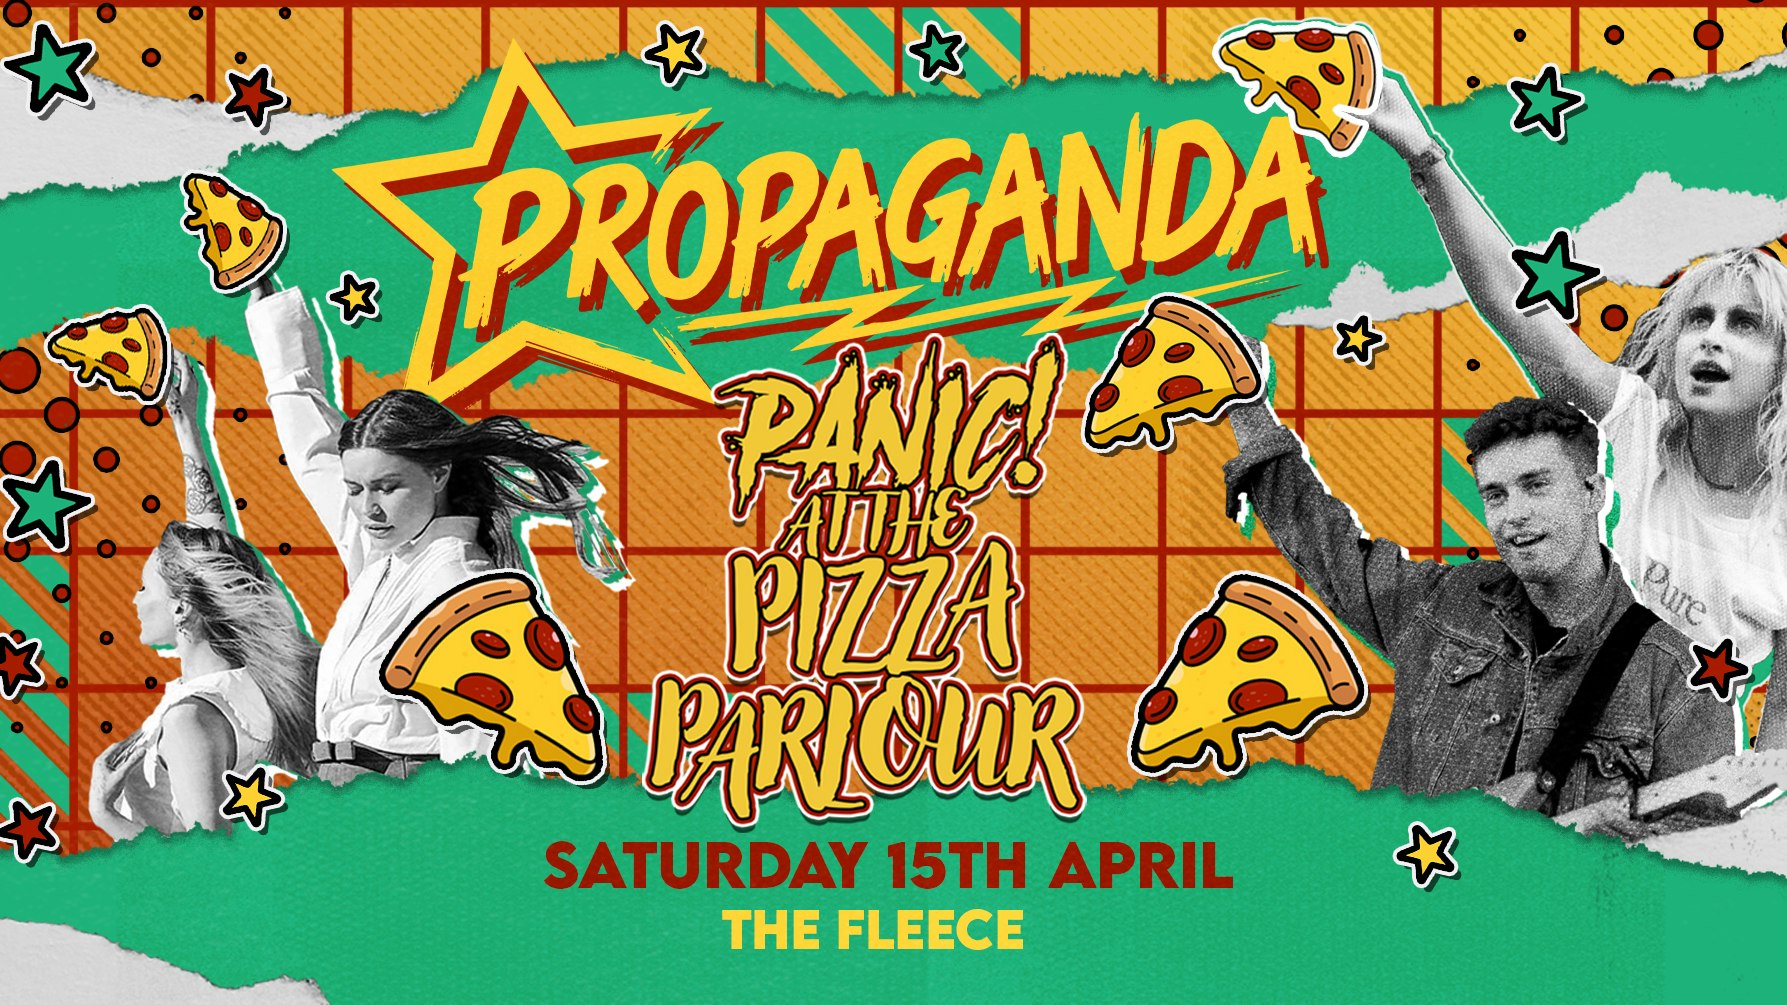 Propaganda Bristol – Panic! At the Pizza Parlour 🍕